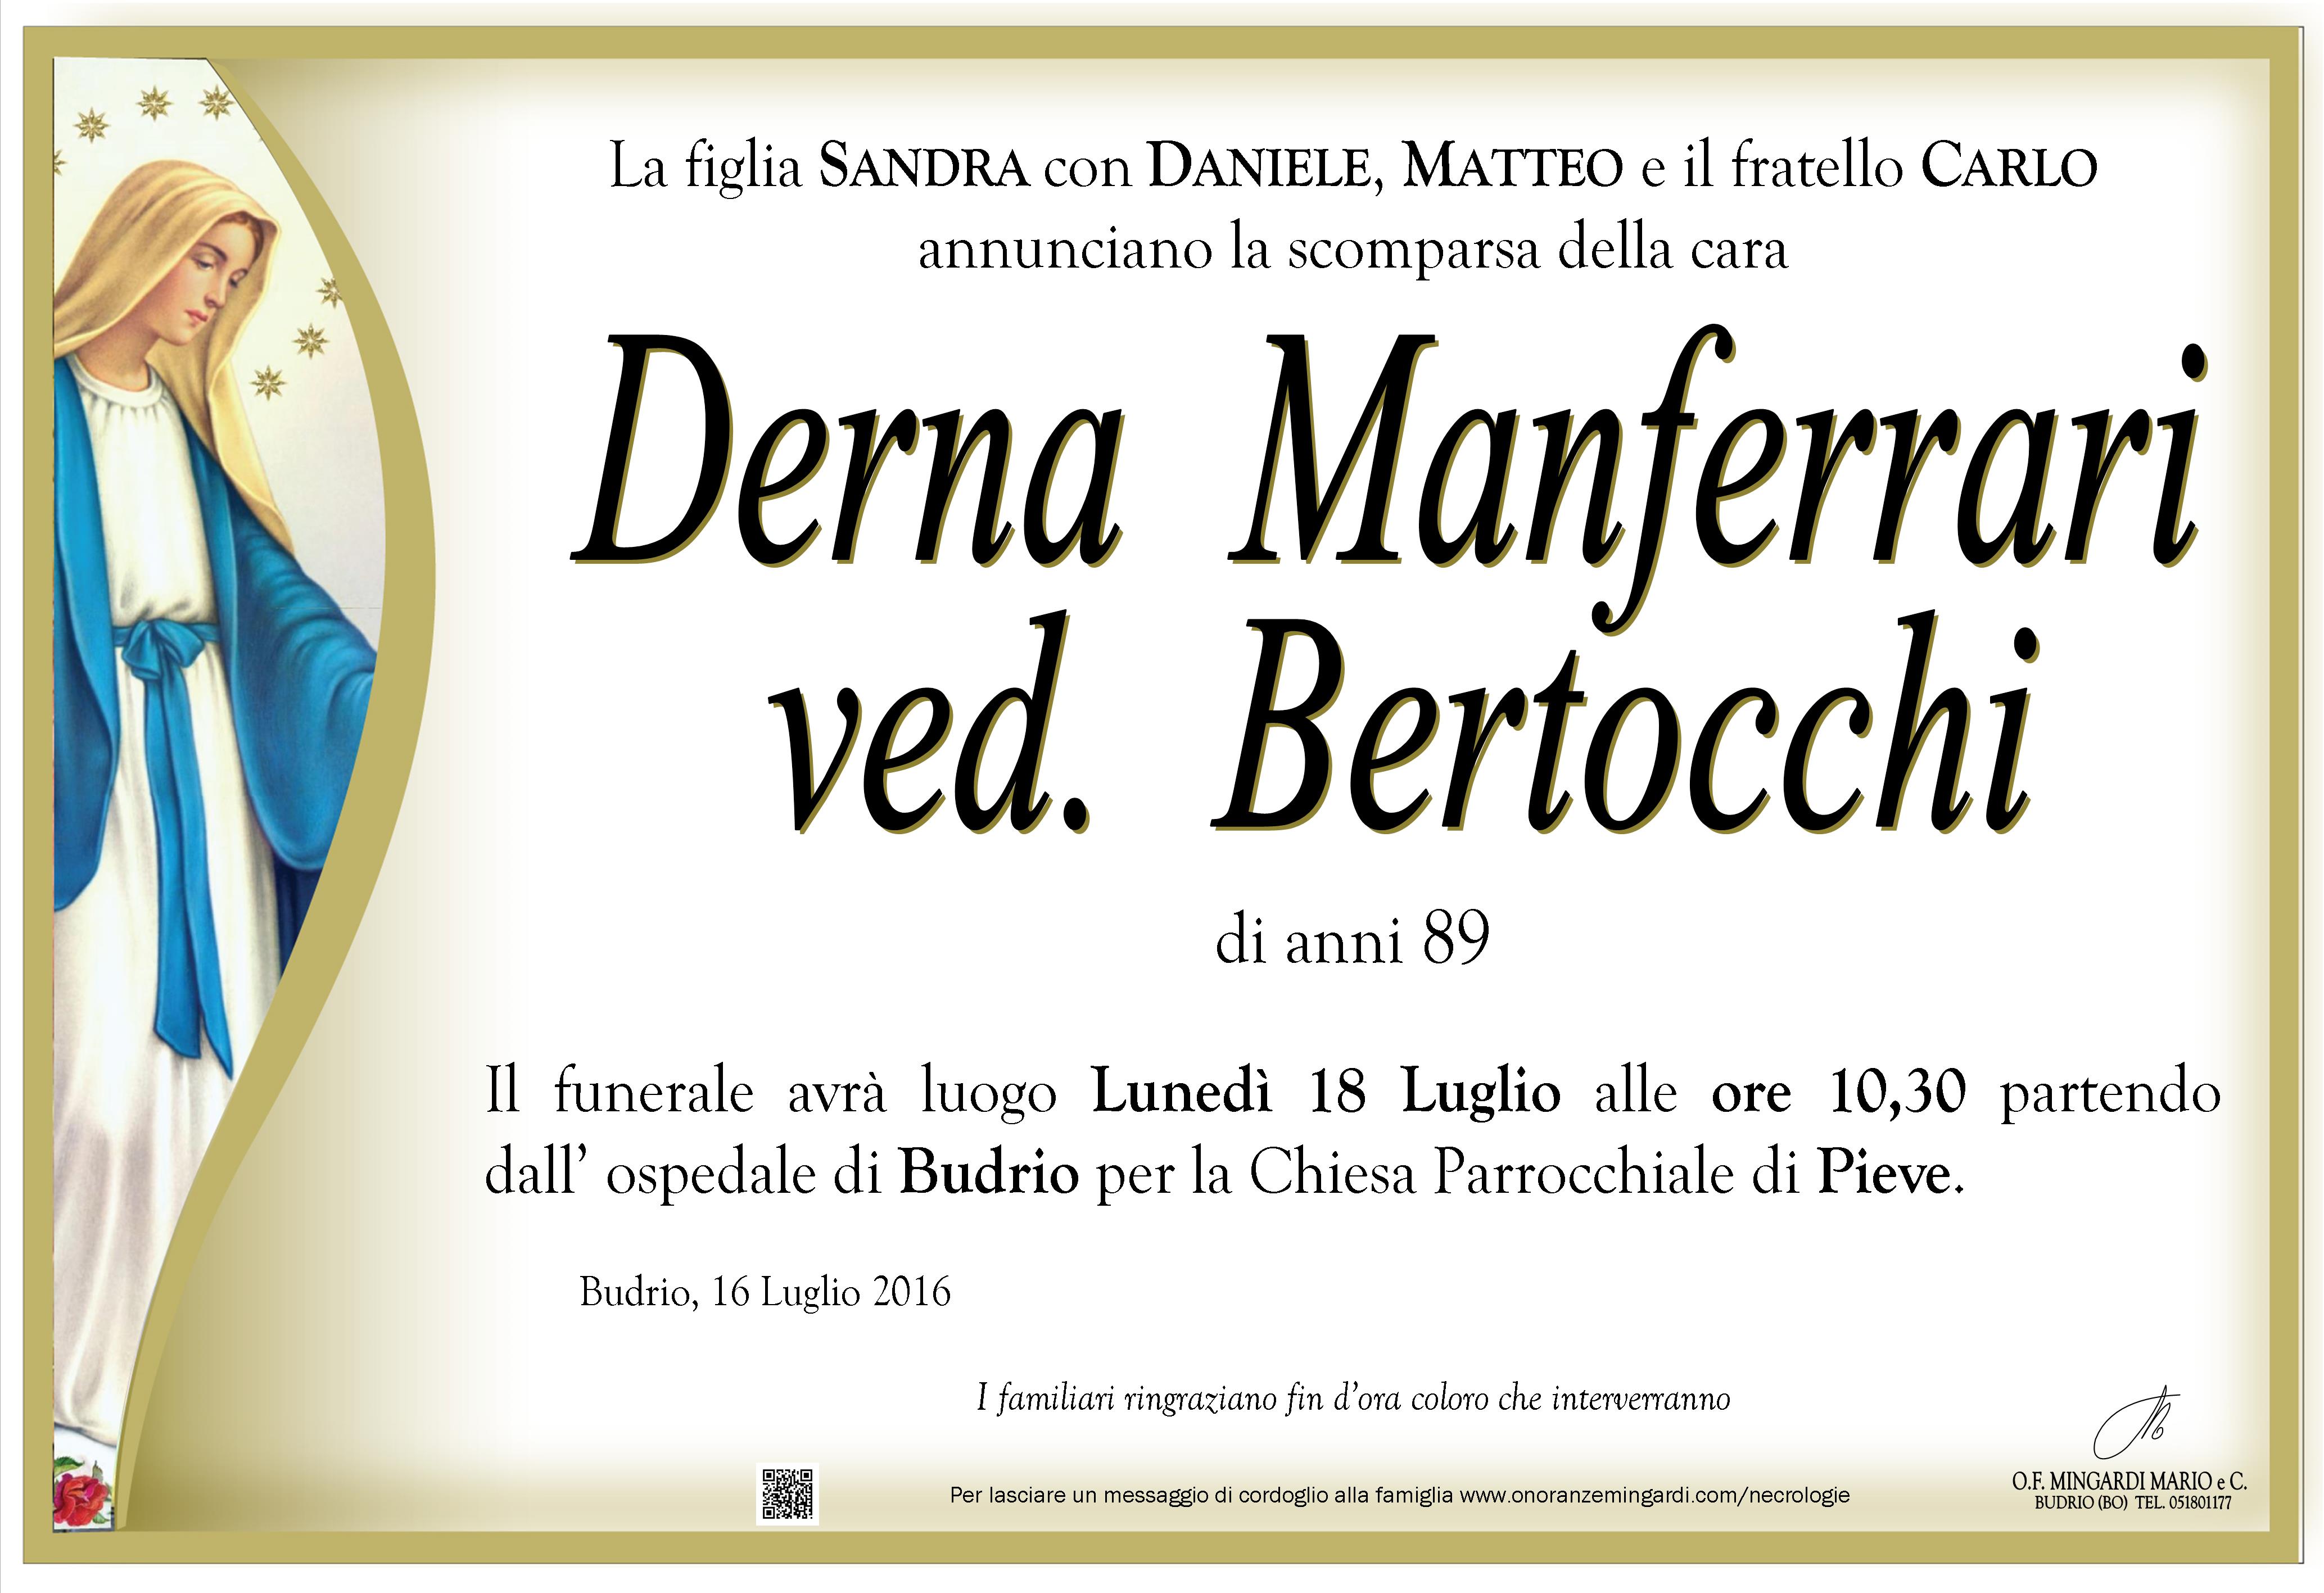 Manifesto Derna Manferrari 15-07-16